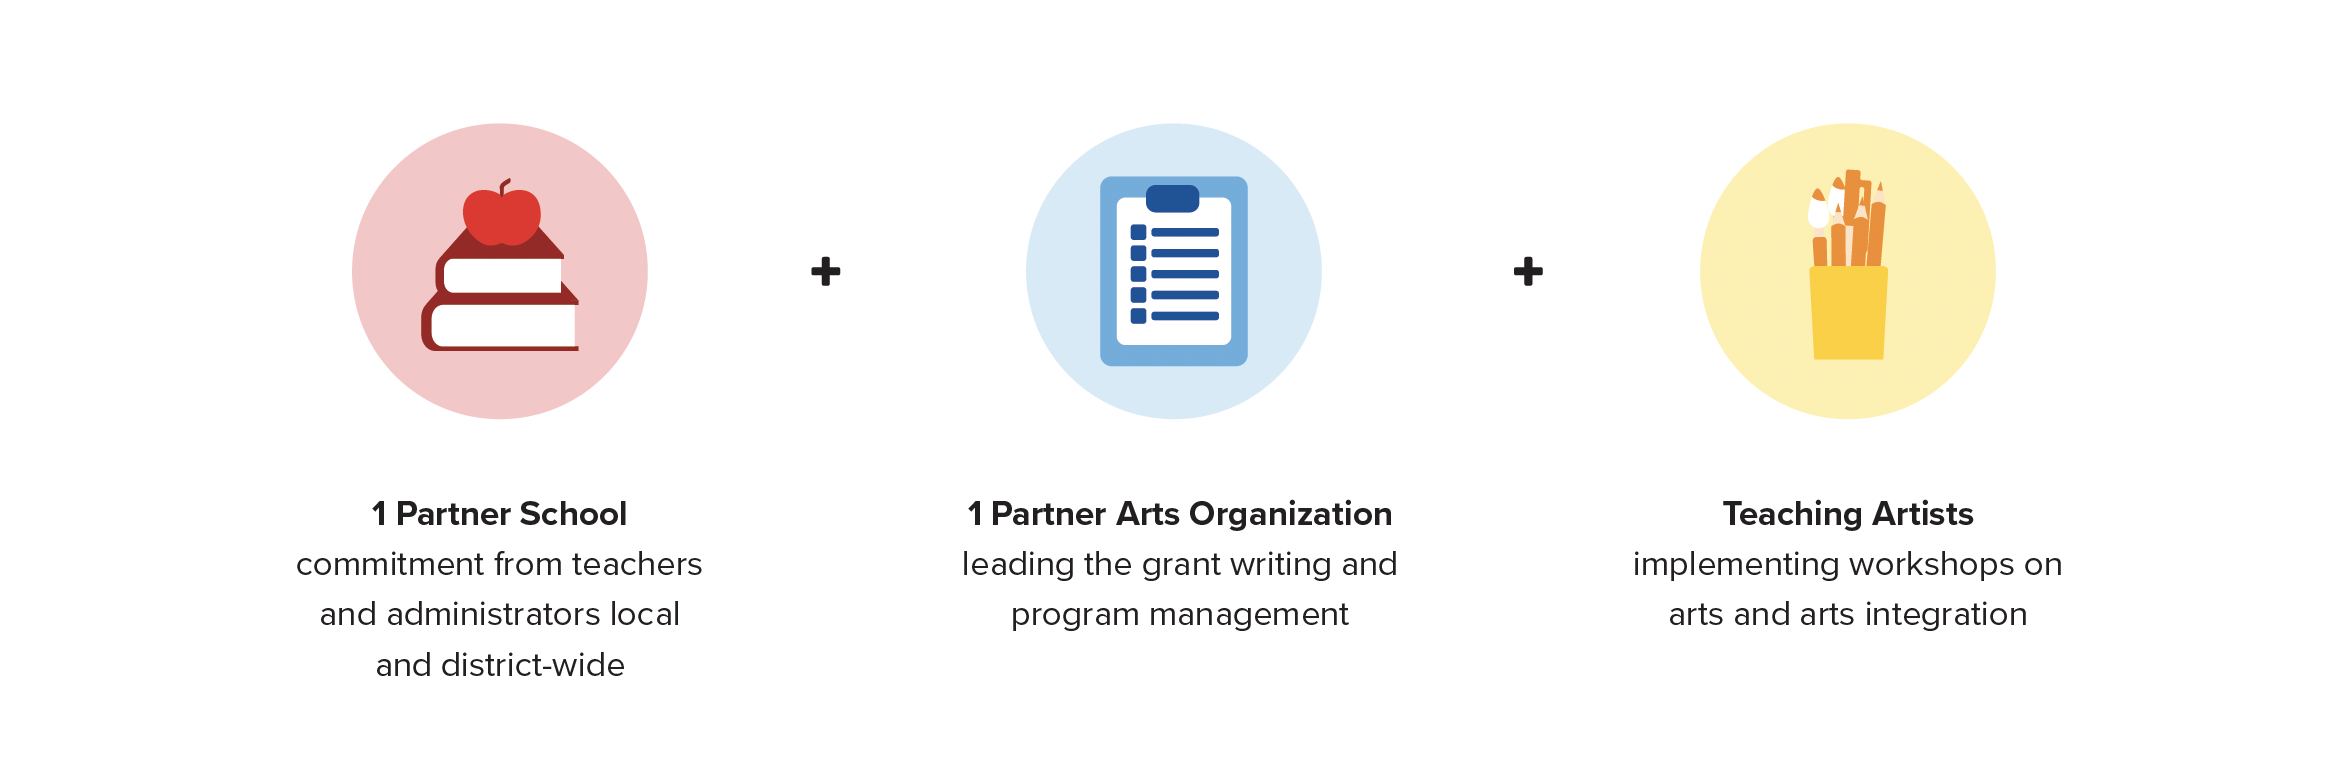 one partner school plus one arts organization plus teaching artists